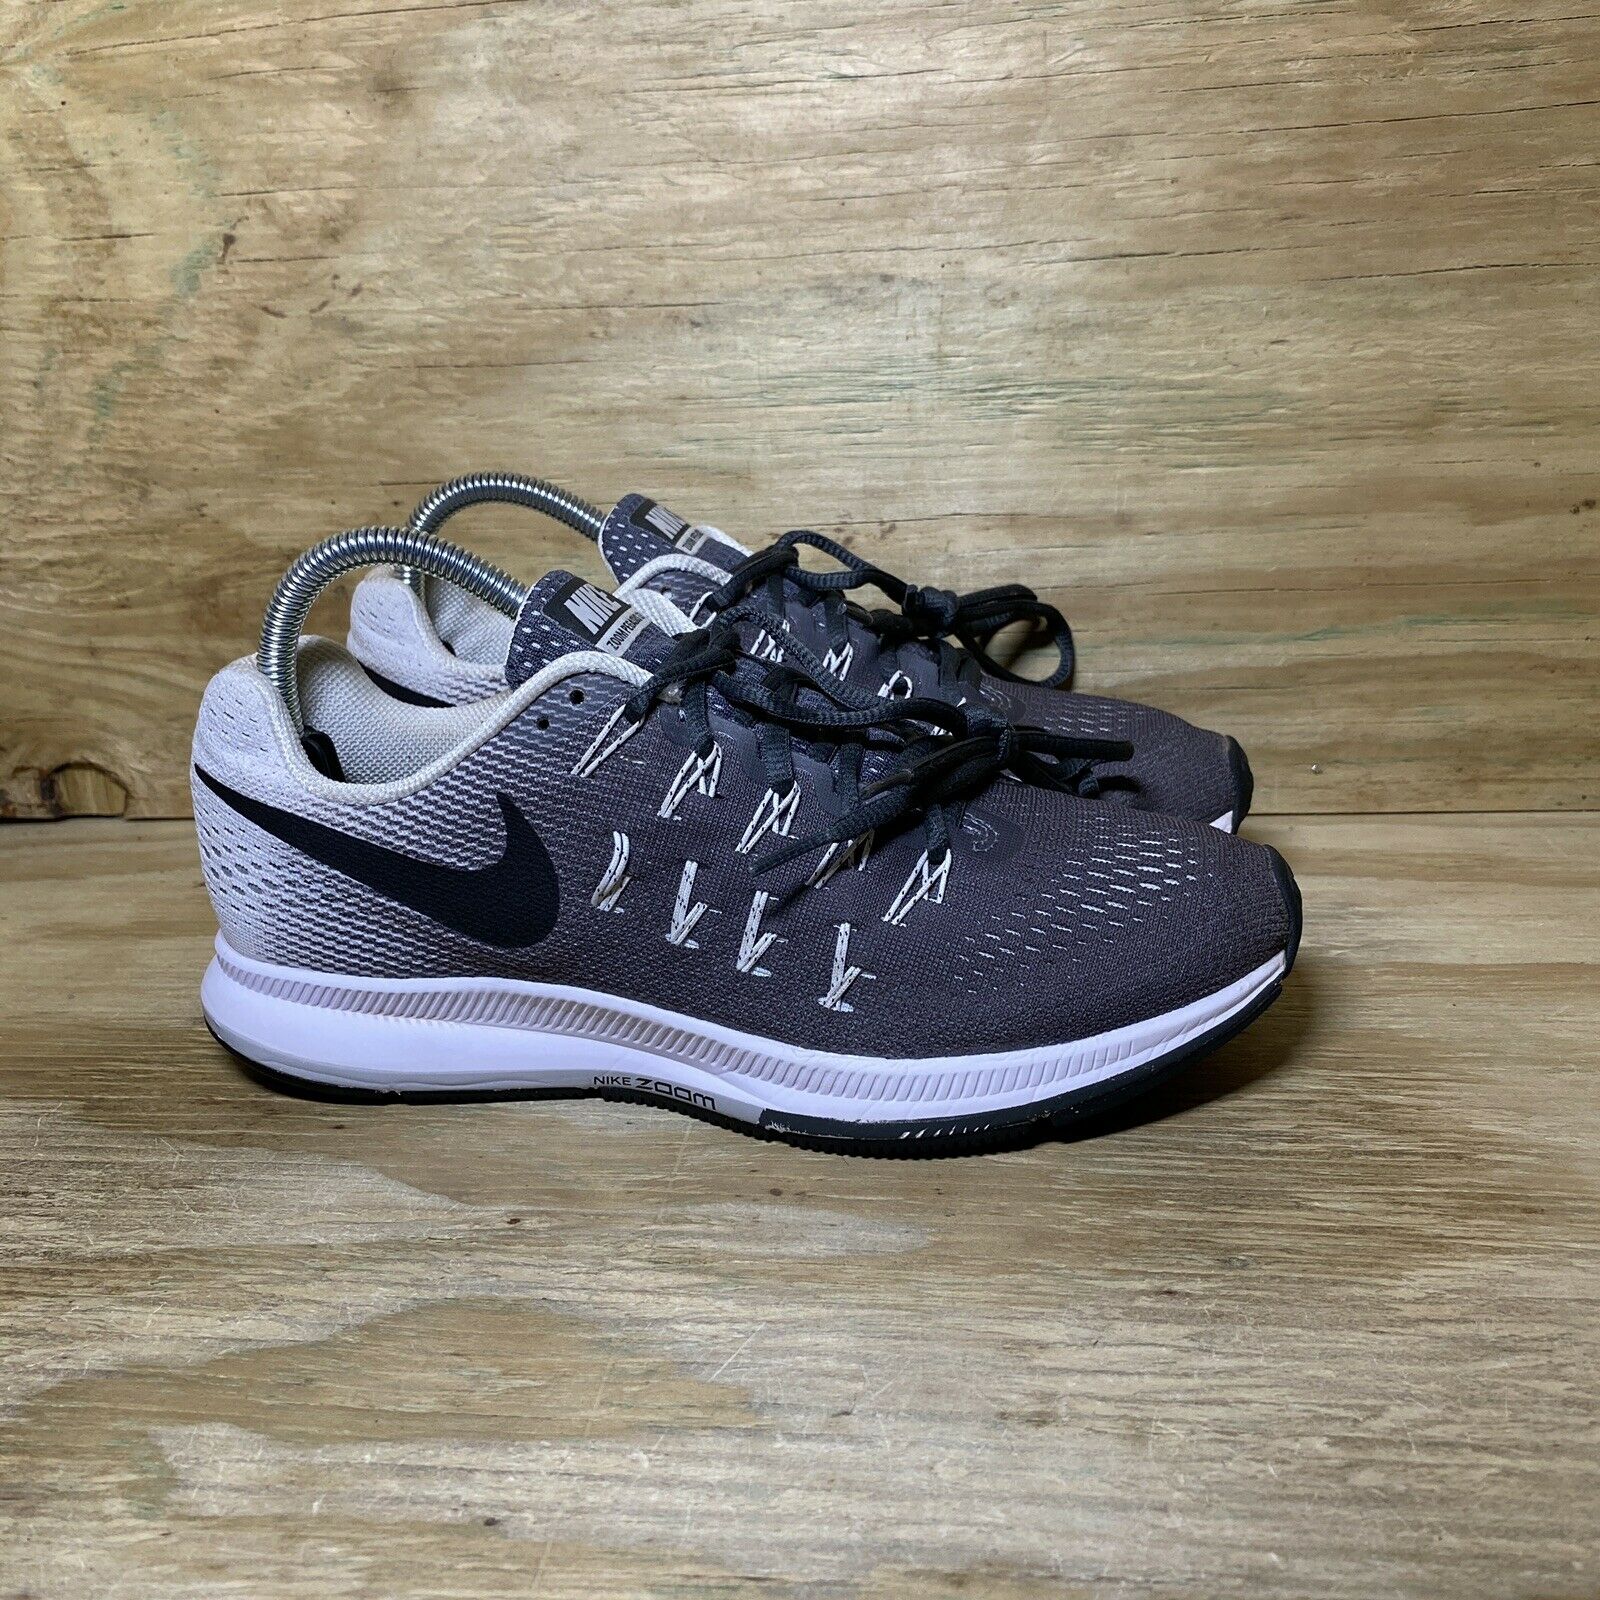 Nike Zoom Pegasus 33 Running Shoes Women Size 8.5 Gray White Athletic 831356-002